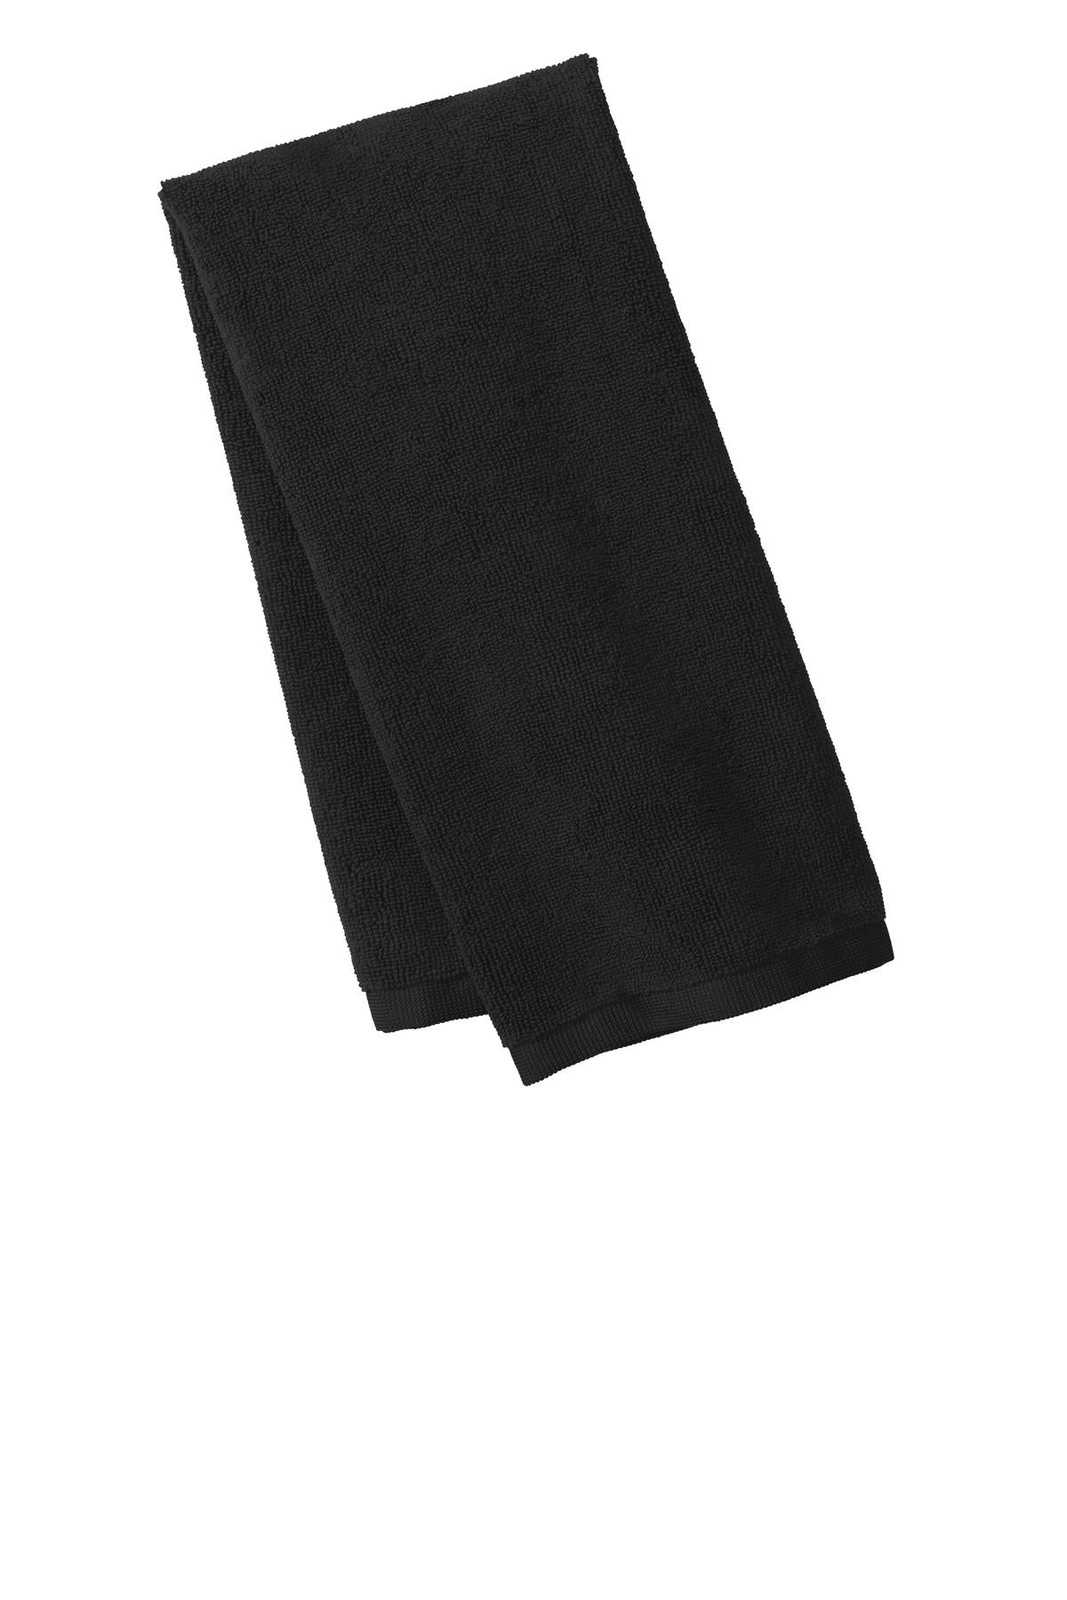 Port Authority TW540 Microfiber Golf Towel - Black - HIT a Double - 1